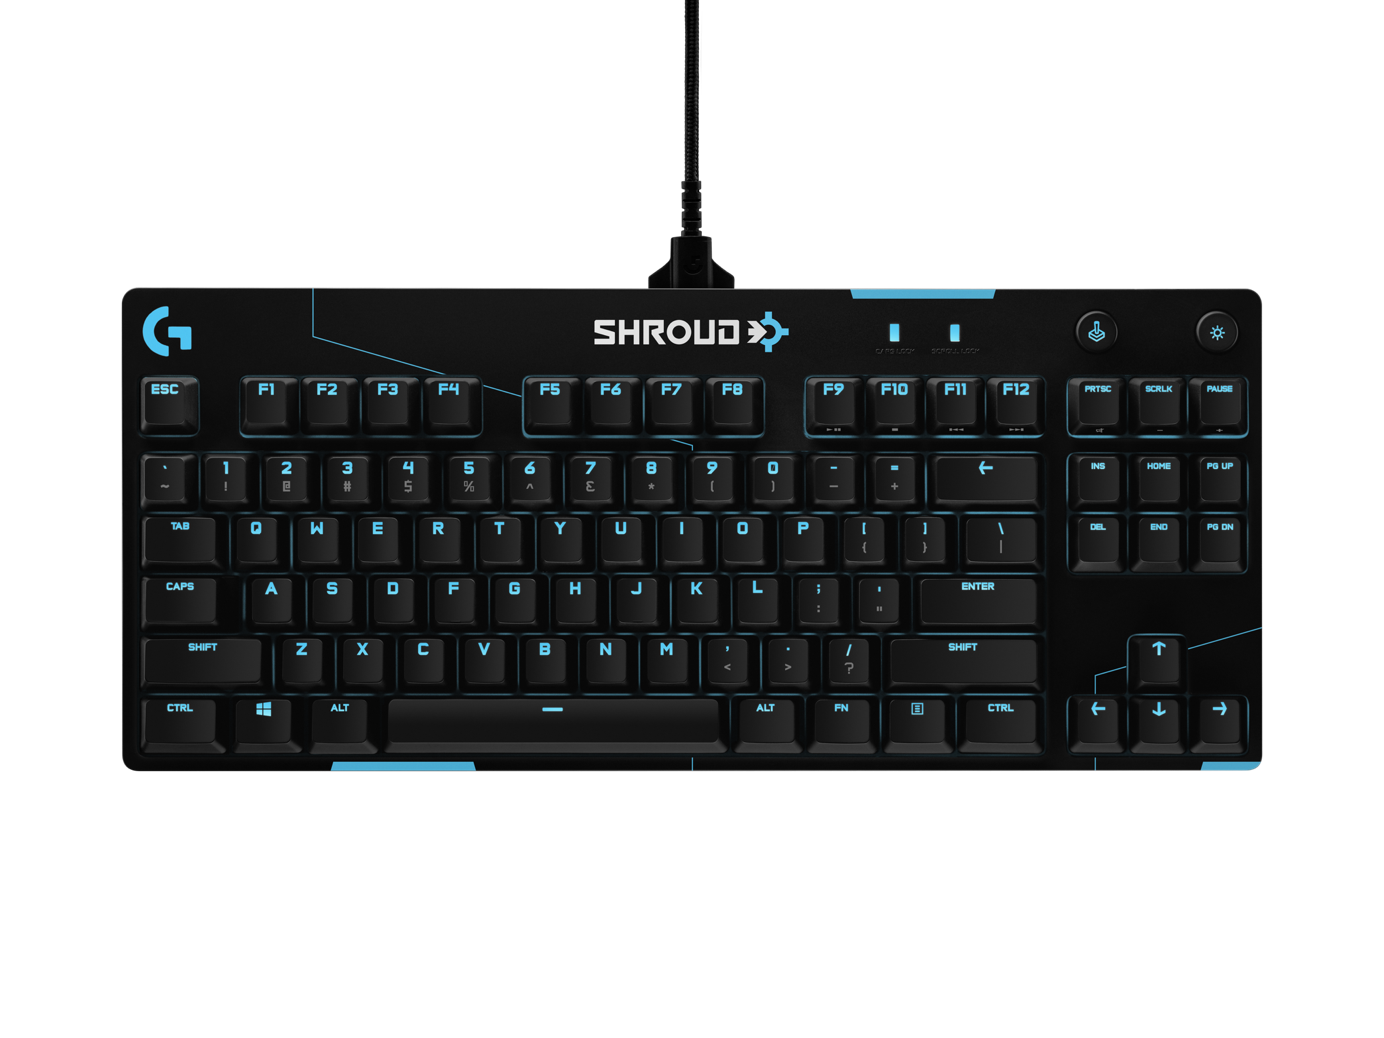 shroud keyboard used